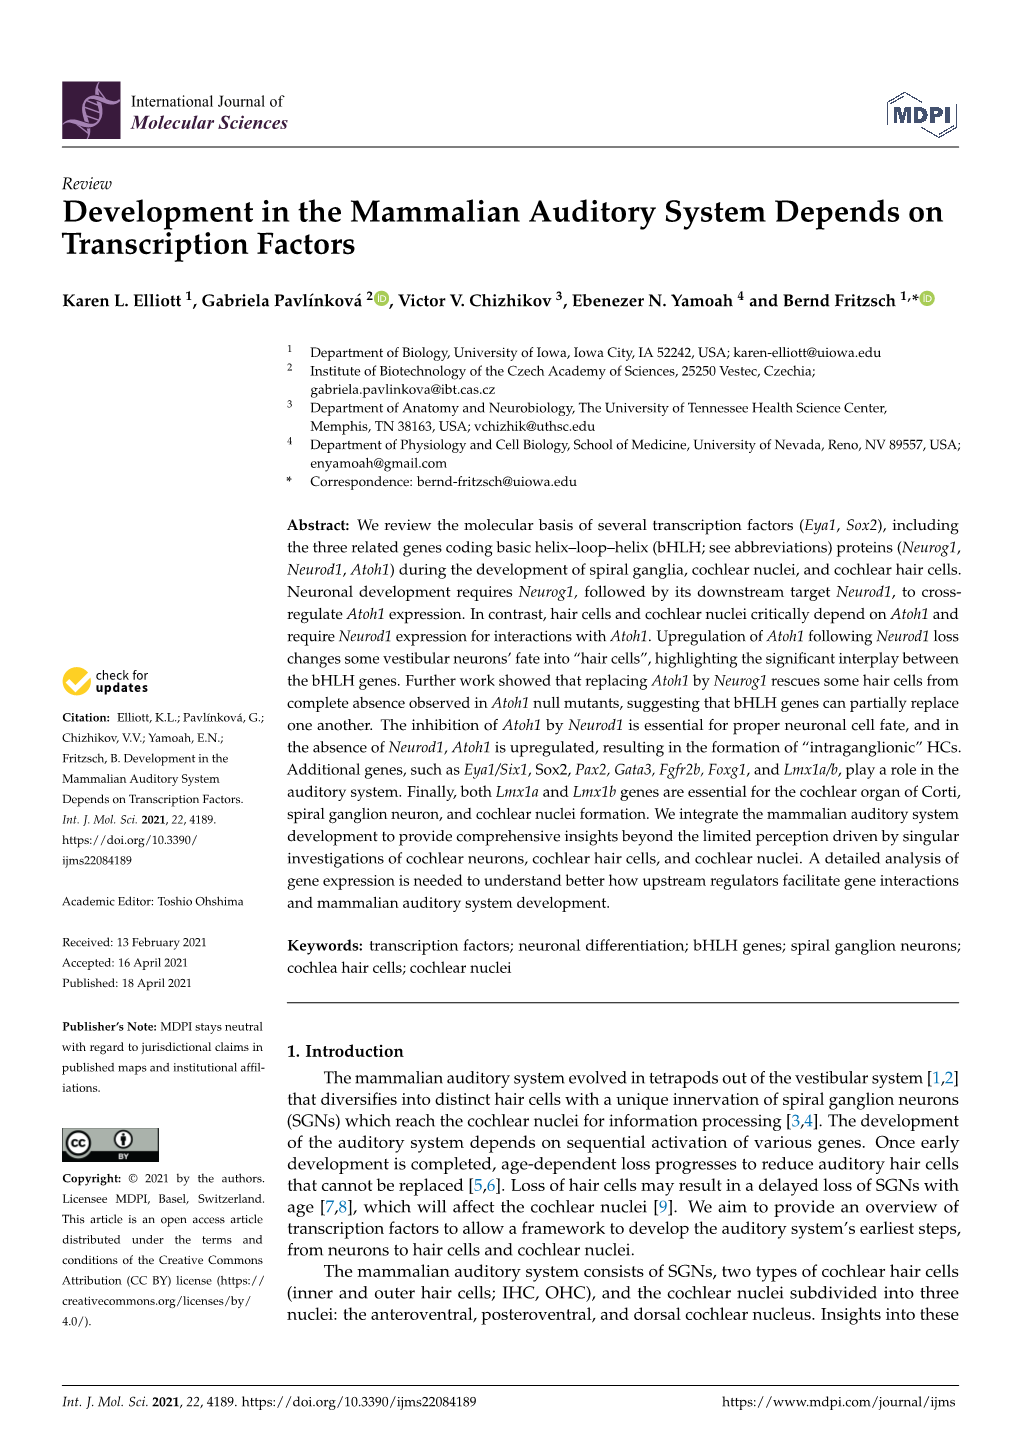 Development in the Mammalian Auditory System Depends on Transcription Factors